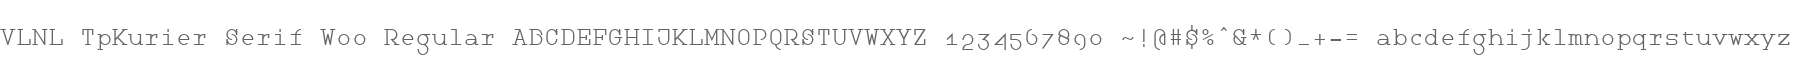 VLNL TpKurier Serif W00 Regular